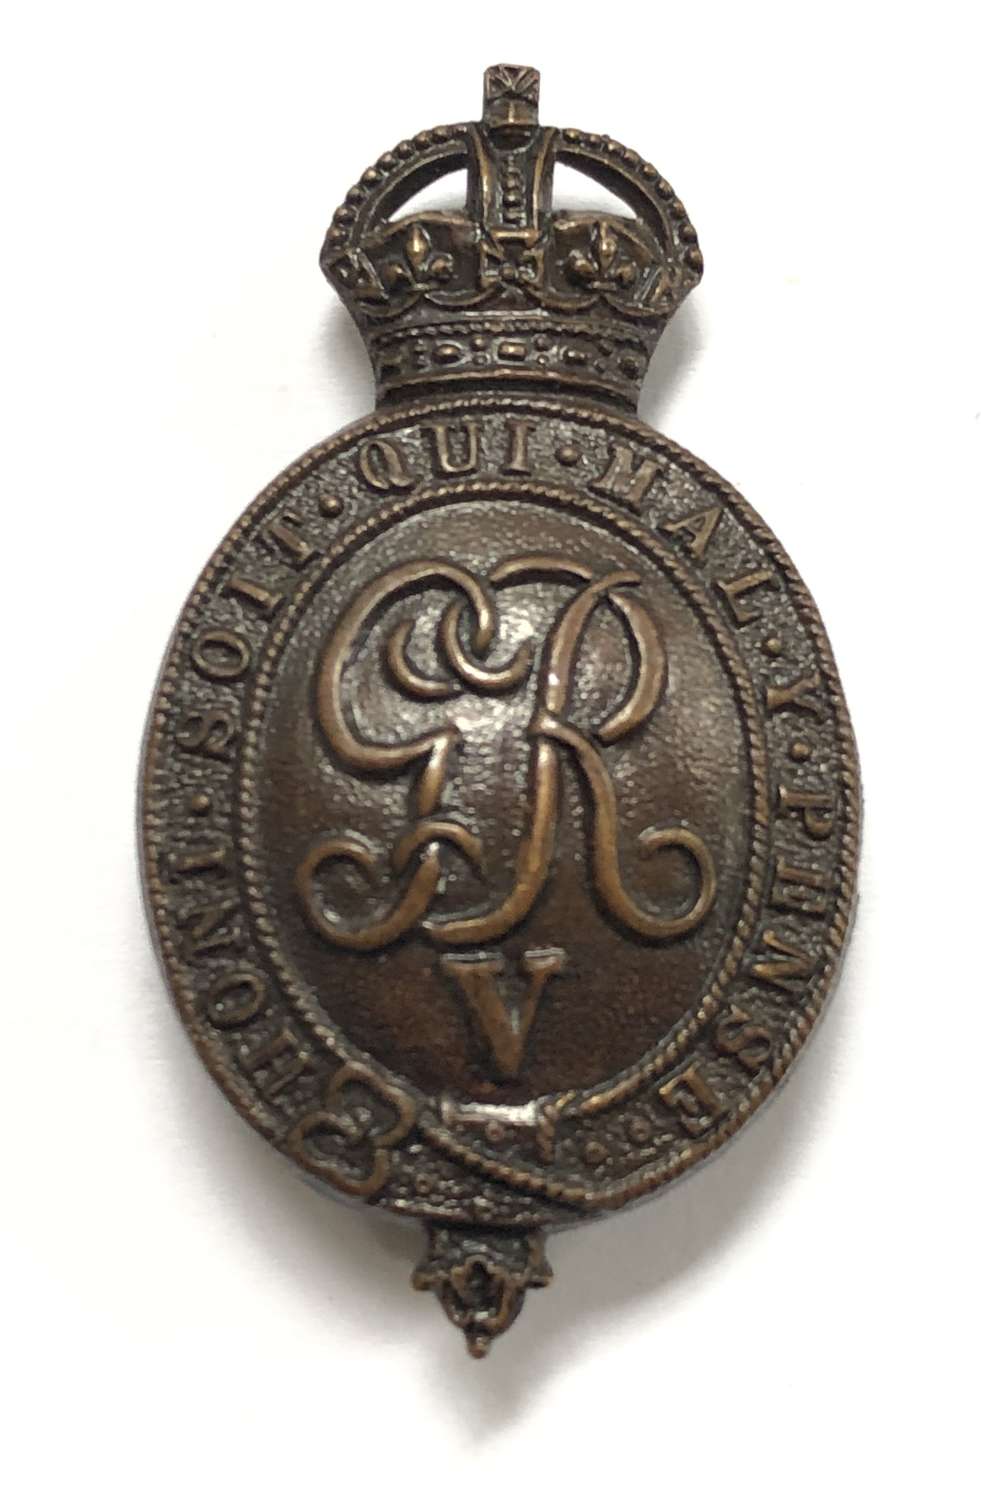 Household Battalion WW1 OR’s bronze cap badge circa 1916